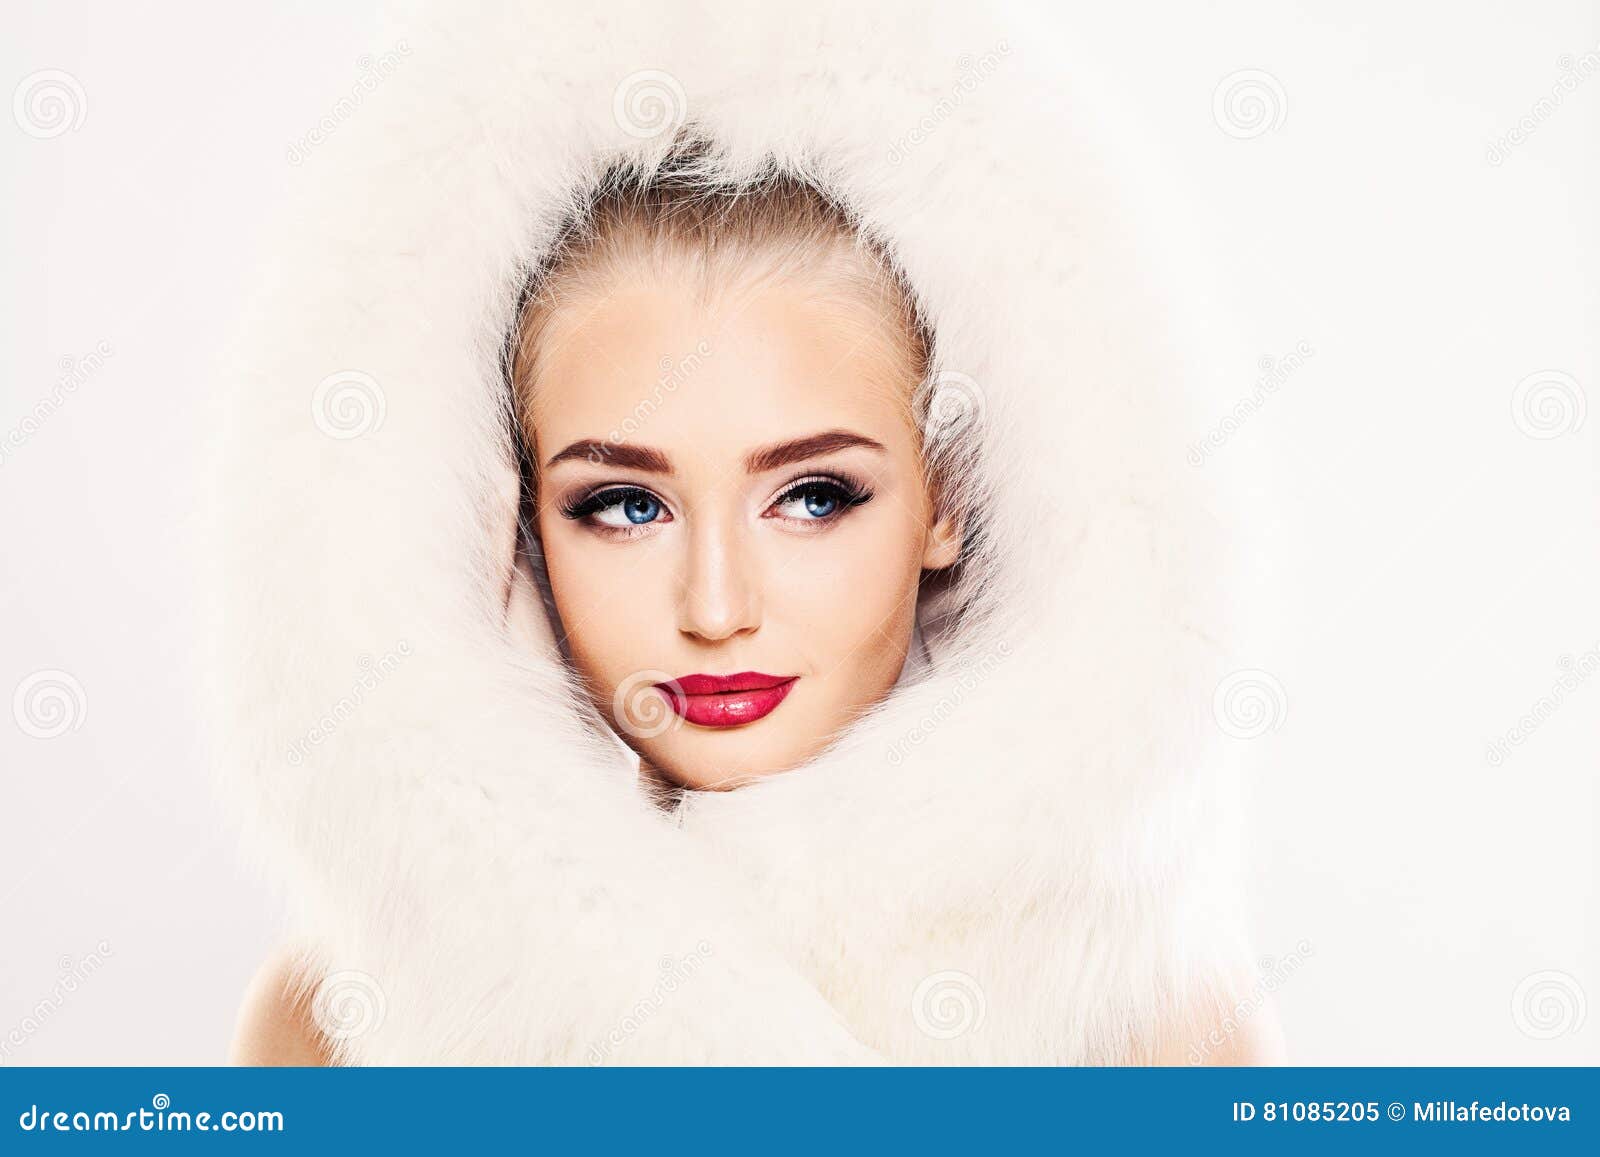 Beautiful Winter Woman Model in White Fur Stock Image - Image of look ...